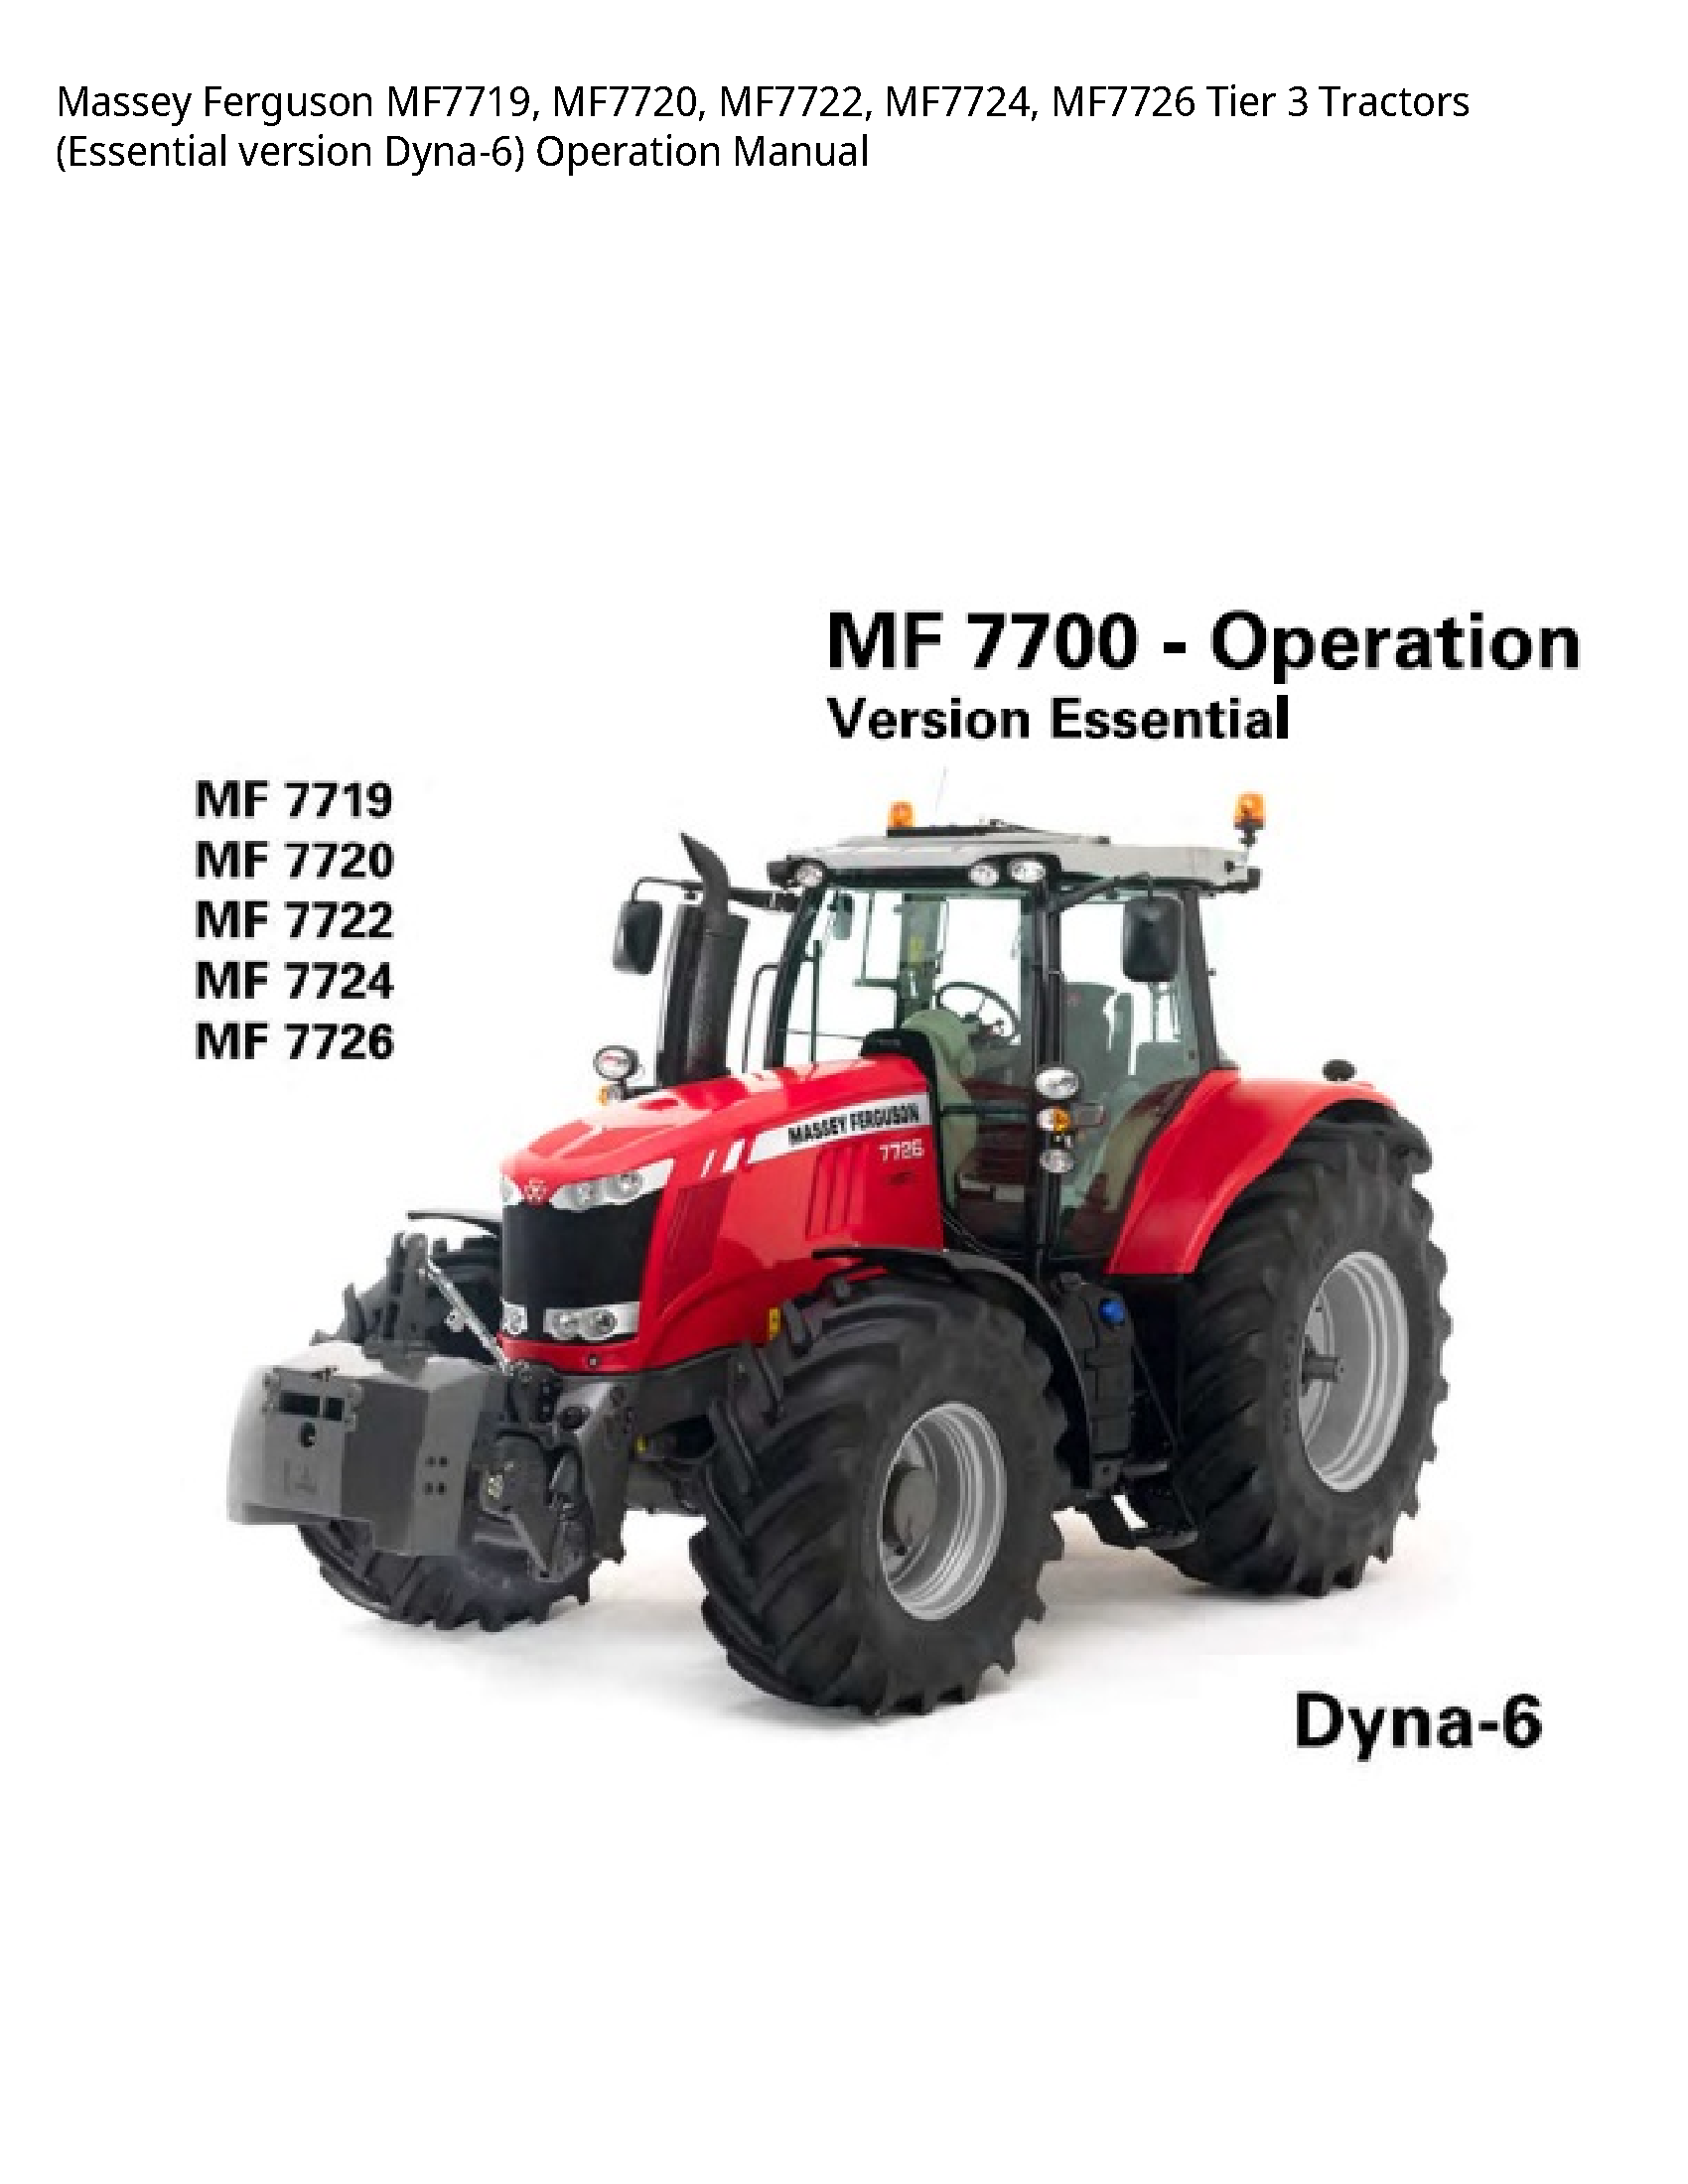 Massey Ferguson MF7719 Tier Tractors (Essential version Operation manual